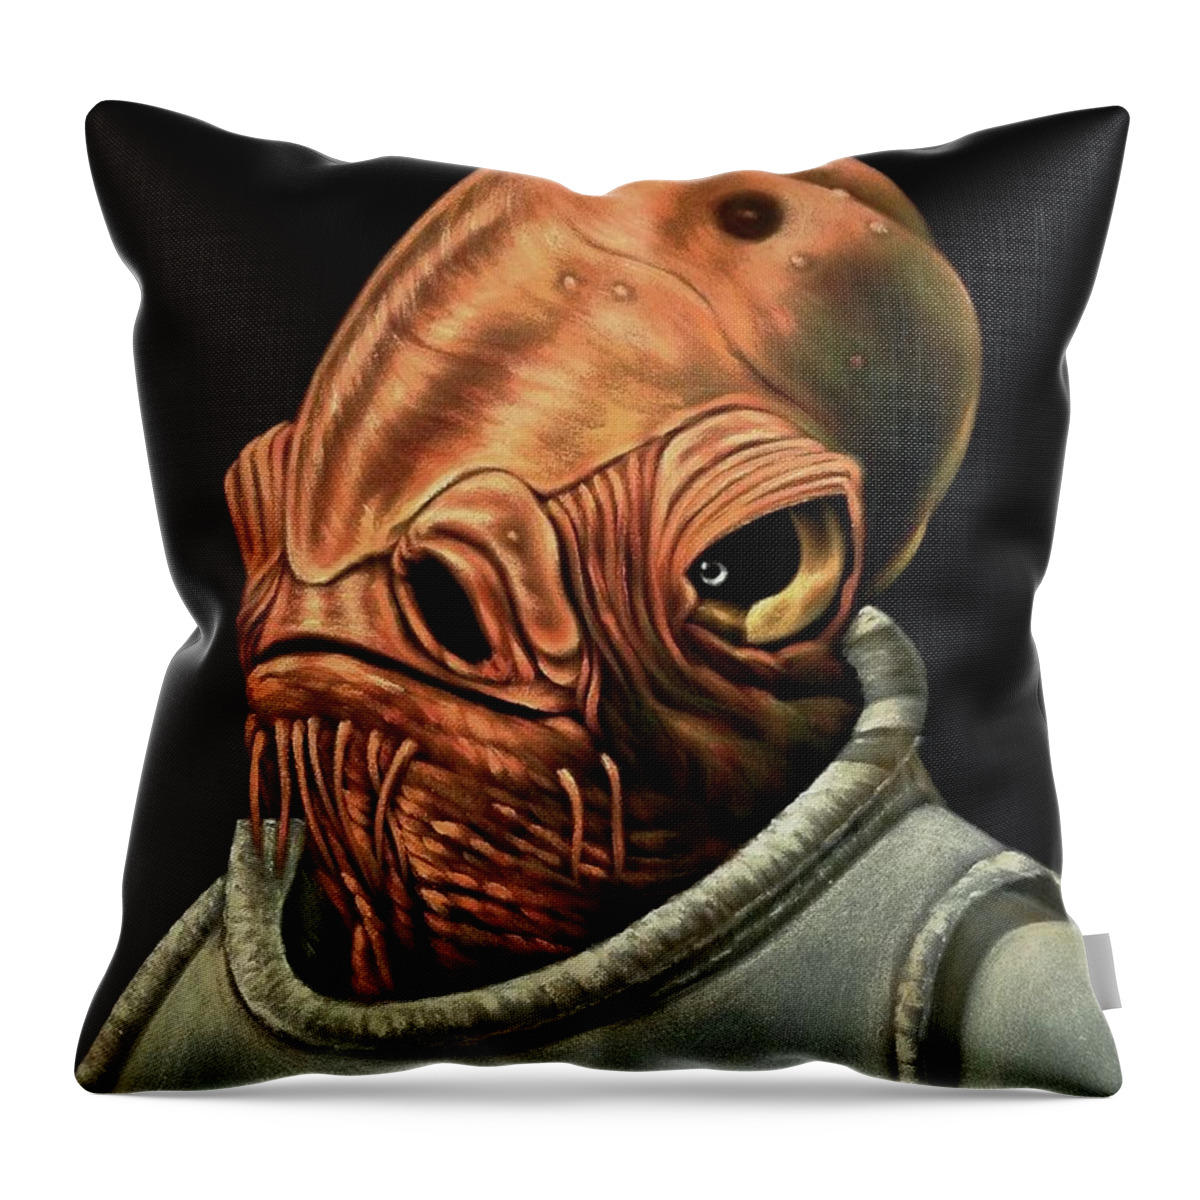 Admiral Ackbar from Star Wars. j520 Throw Pillow by Jorge Torrones - Pixels  Merch